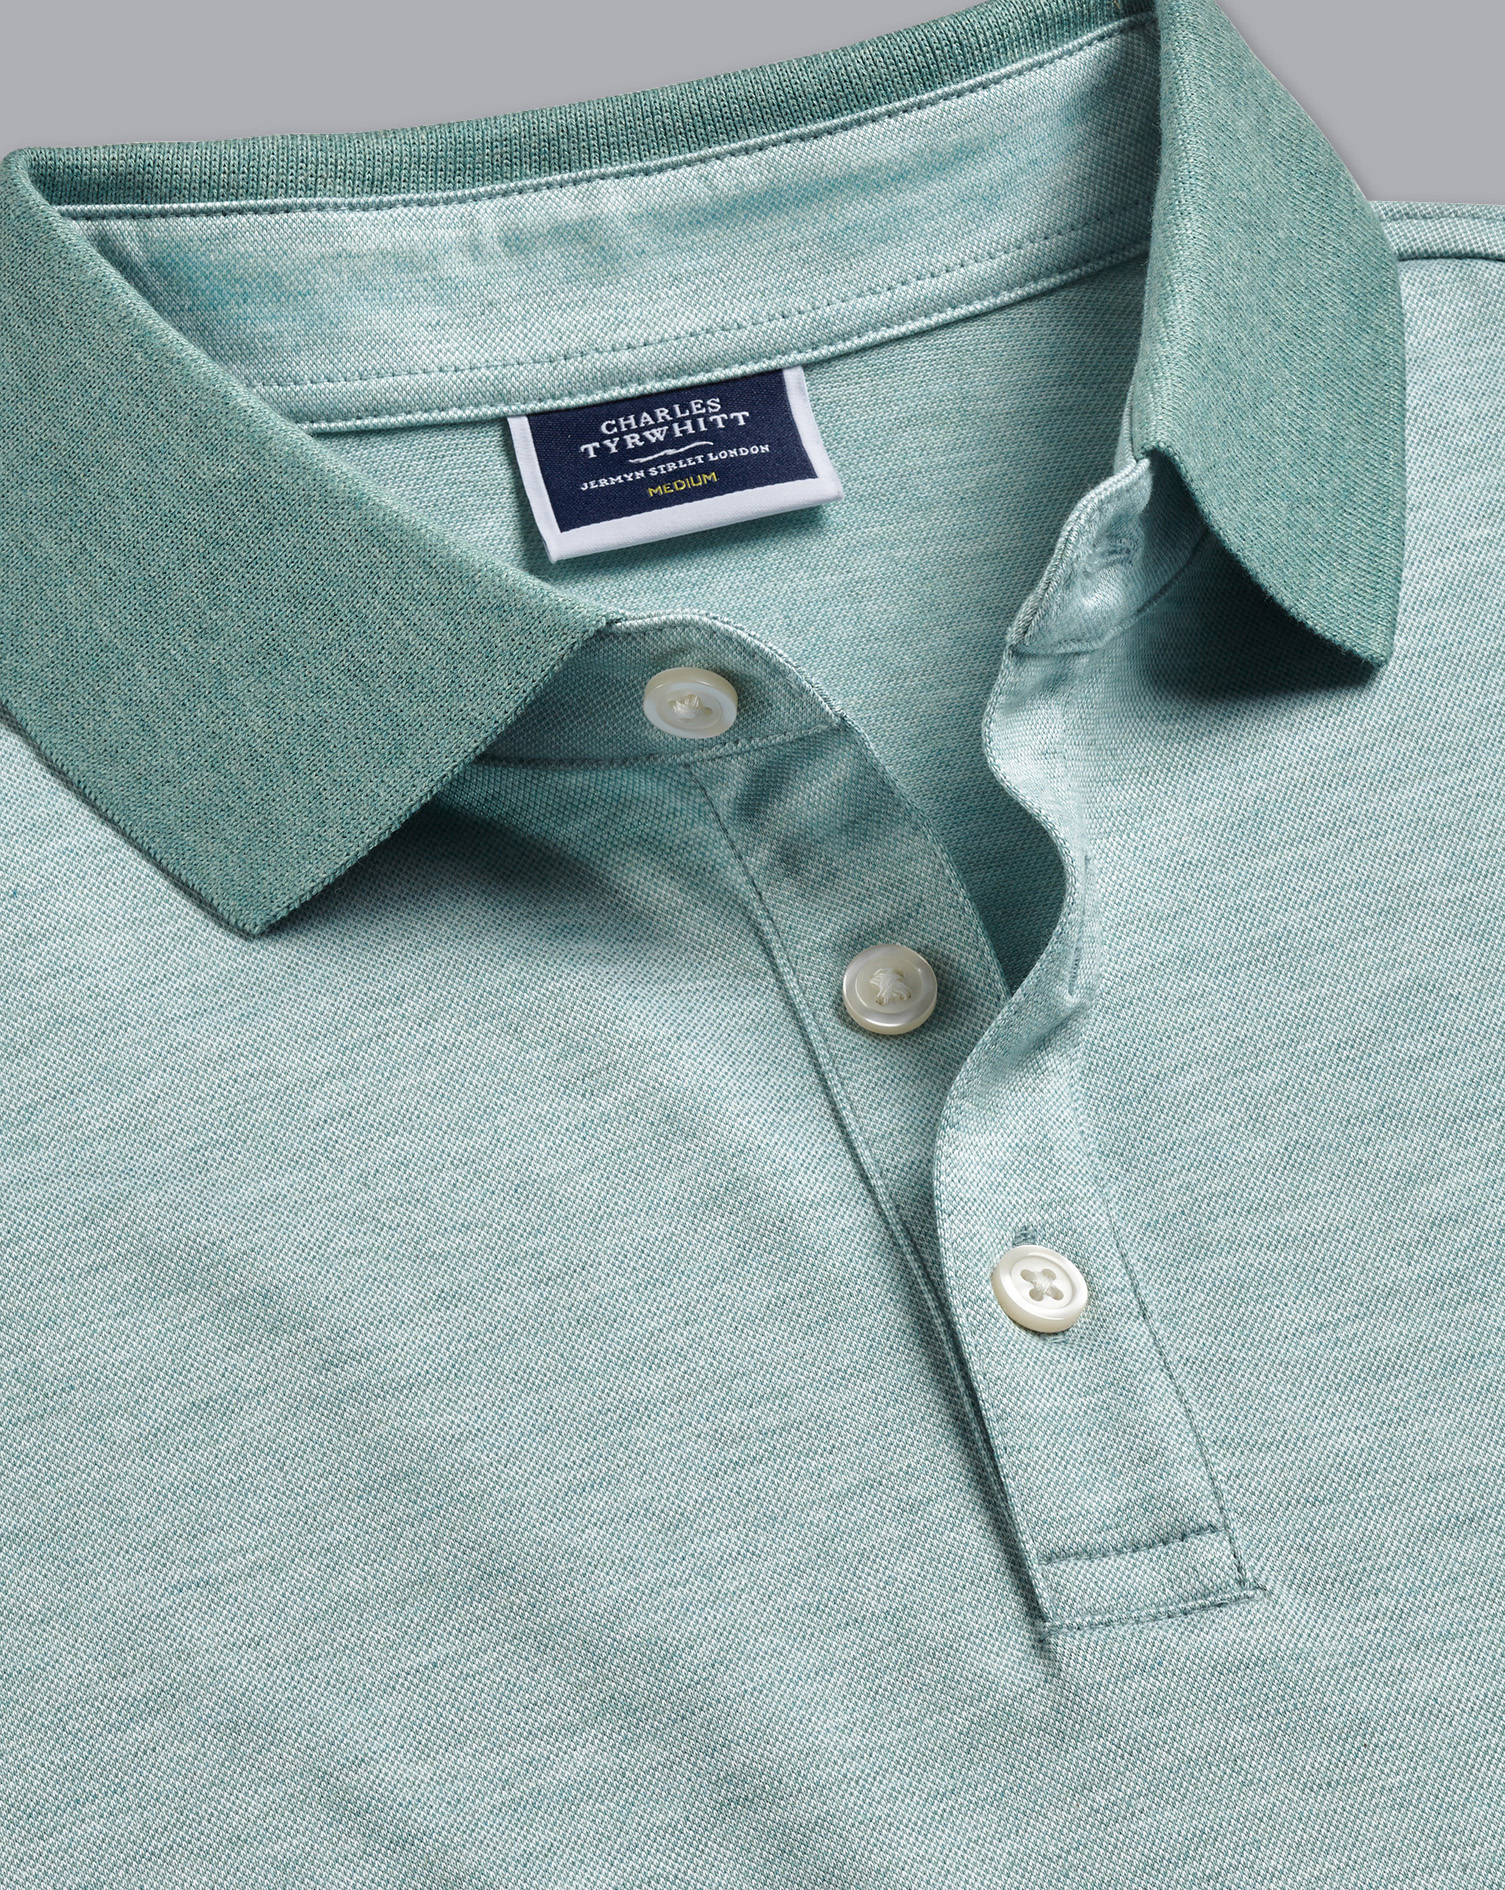 Men's Charles Tyrwhitt Birdseye Pique Polo Shirt - Teal Green Size XXL Cotton
